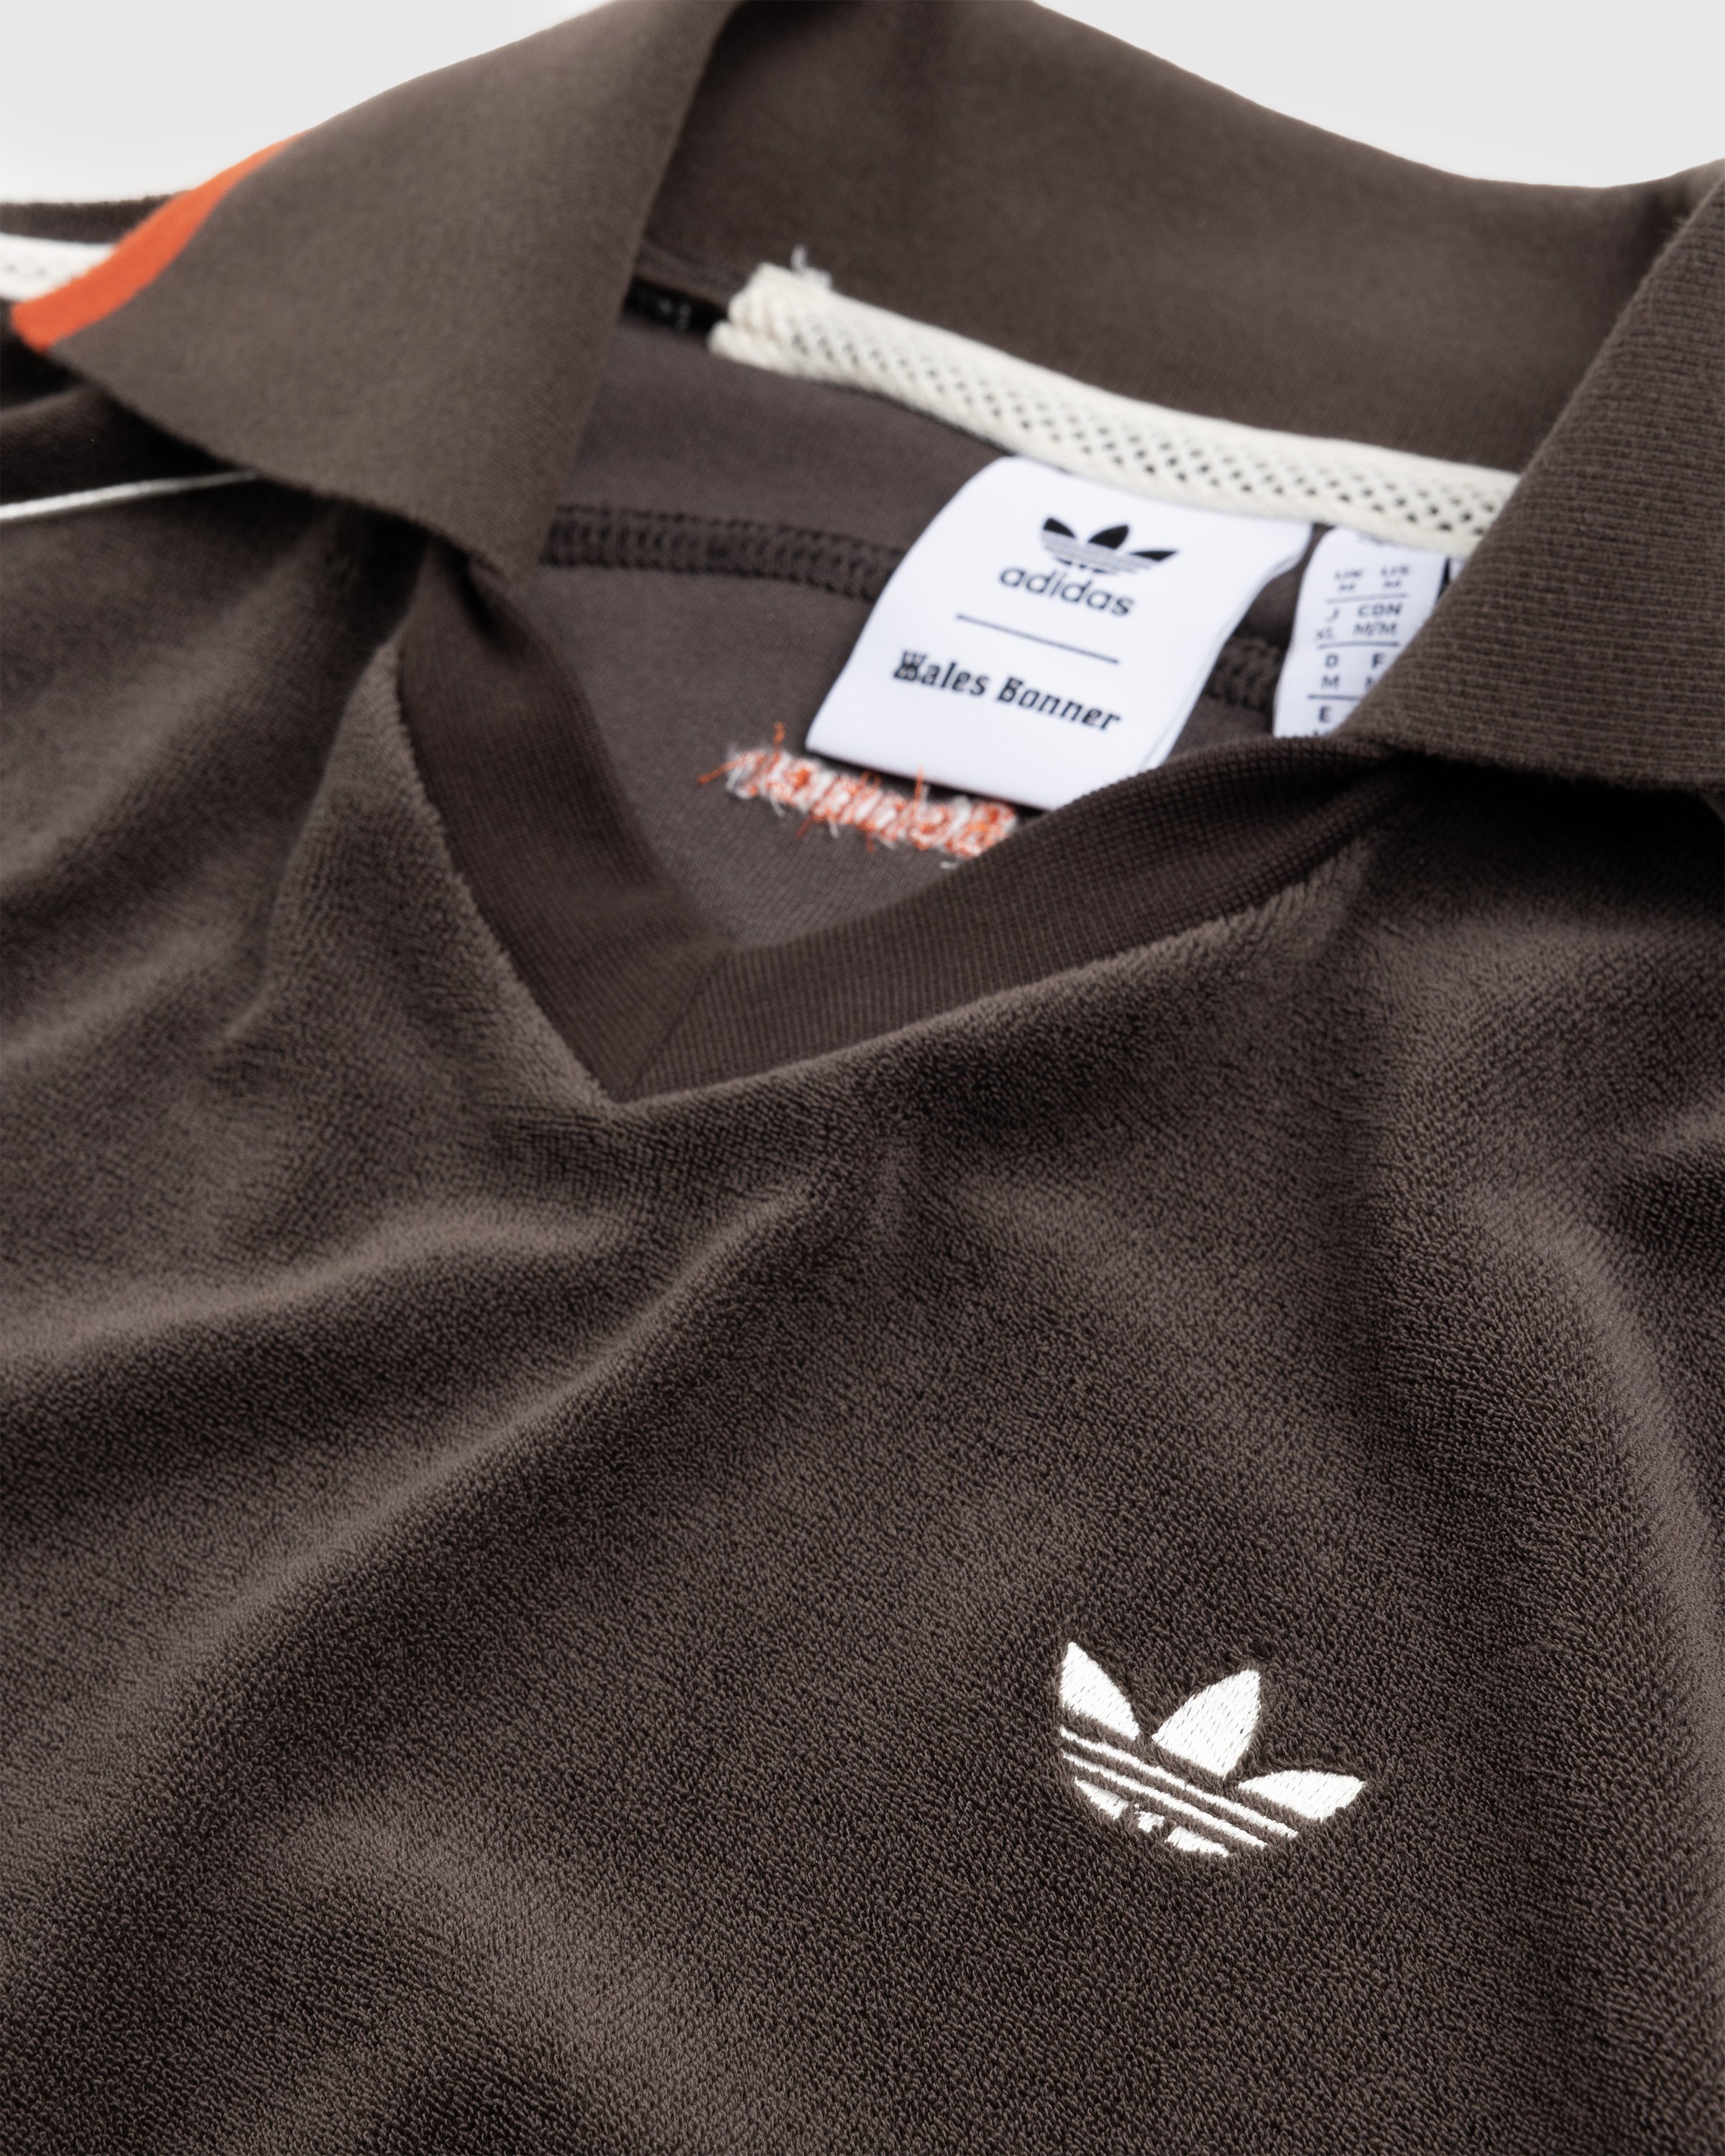 Adidas x Wales Bonner - Logo Embroidered Longsleeve Dark Brown - Clothing - Brown - Image 5